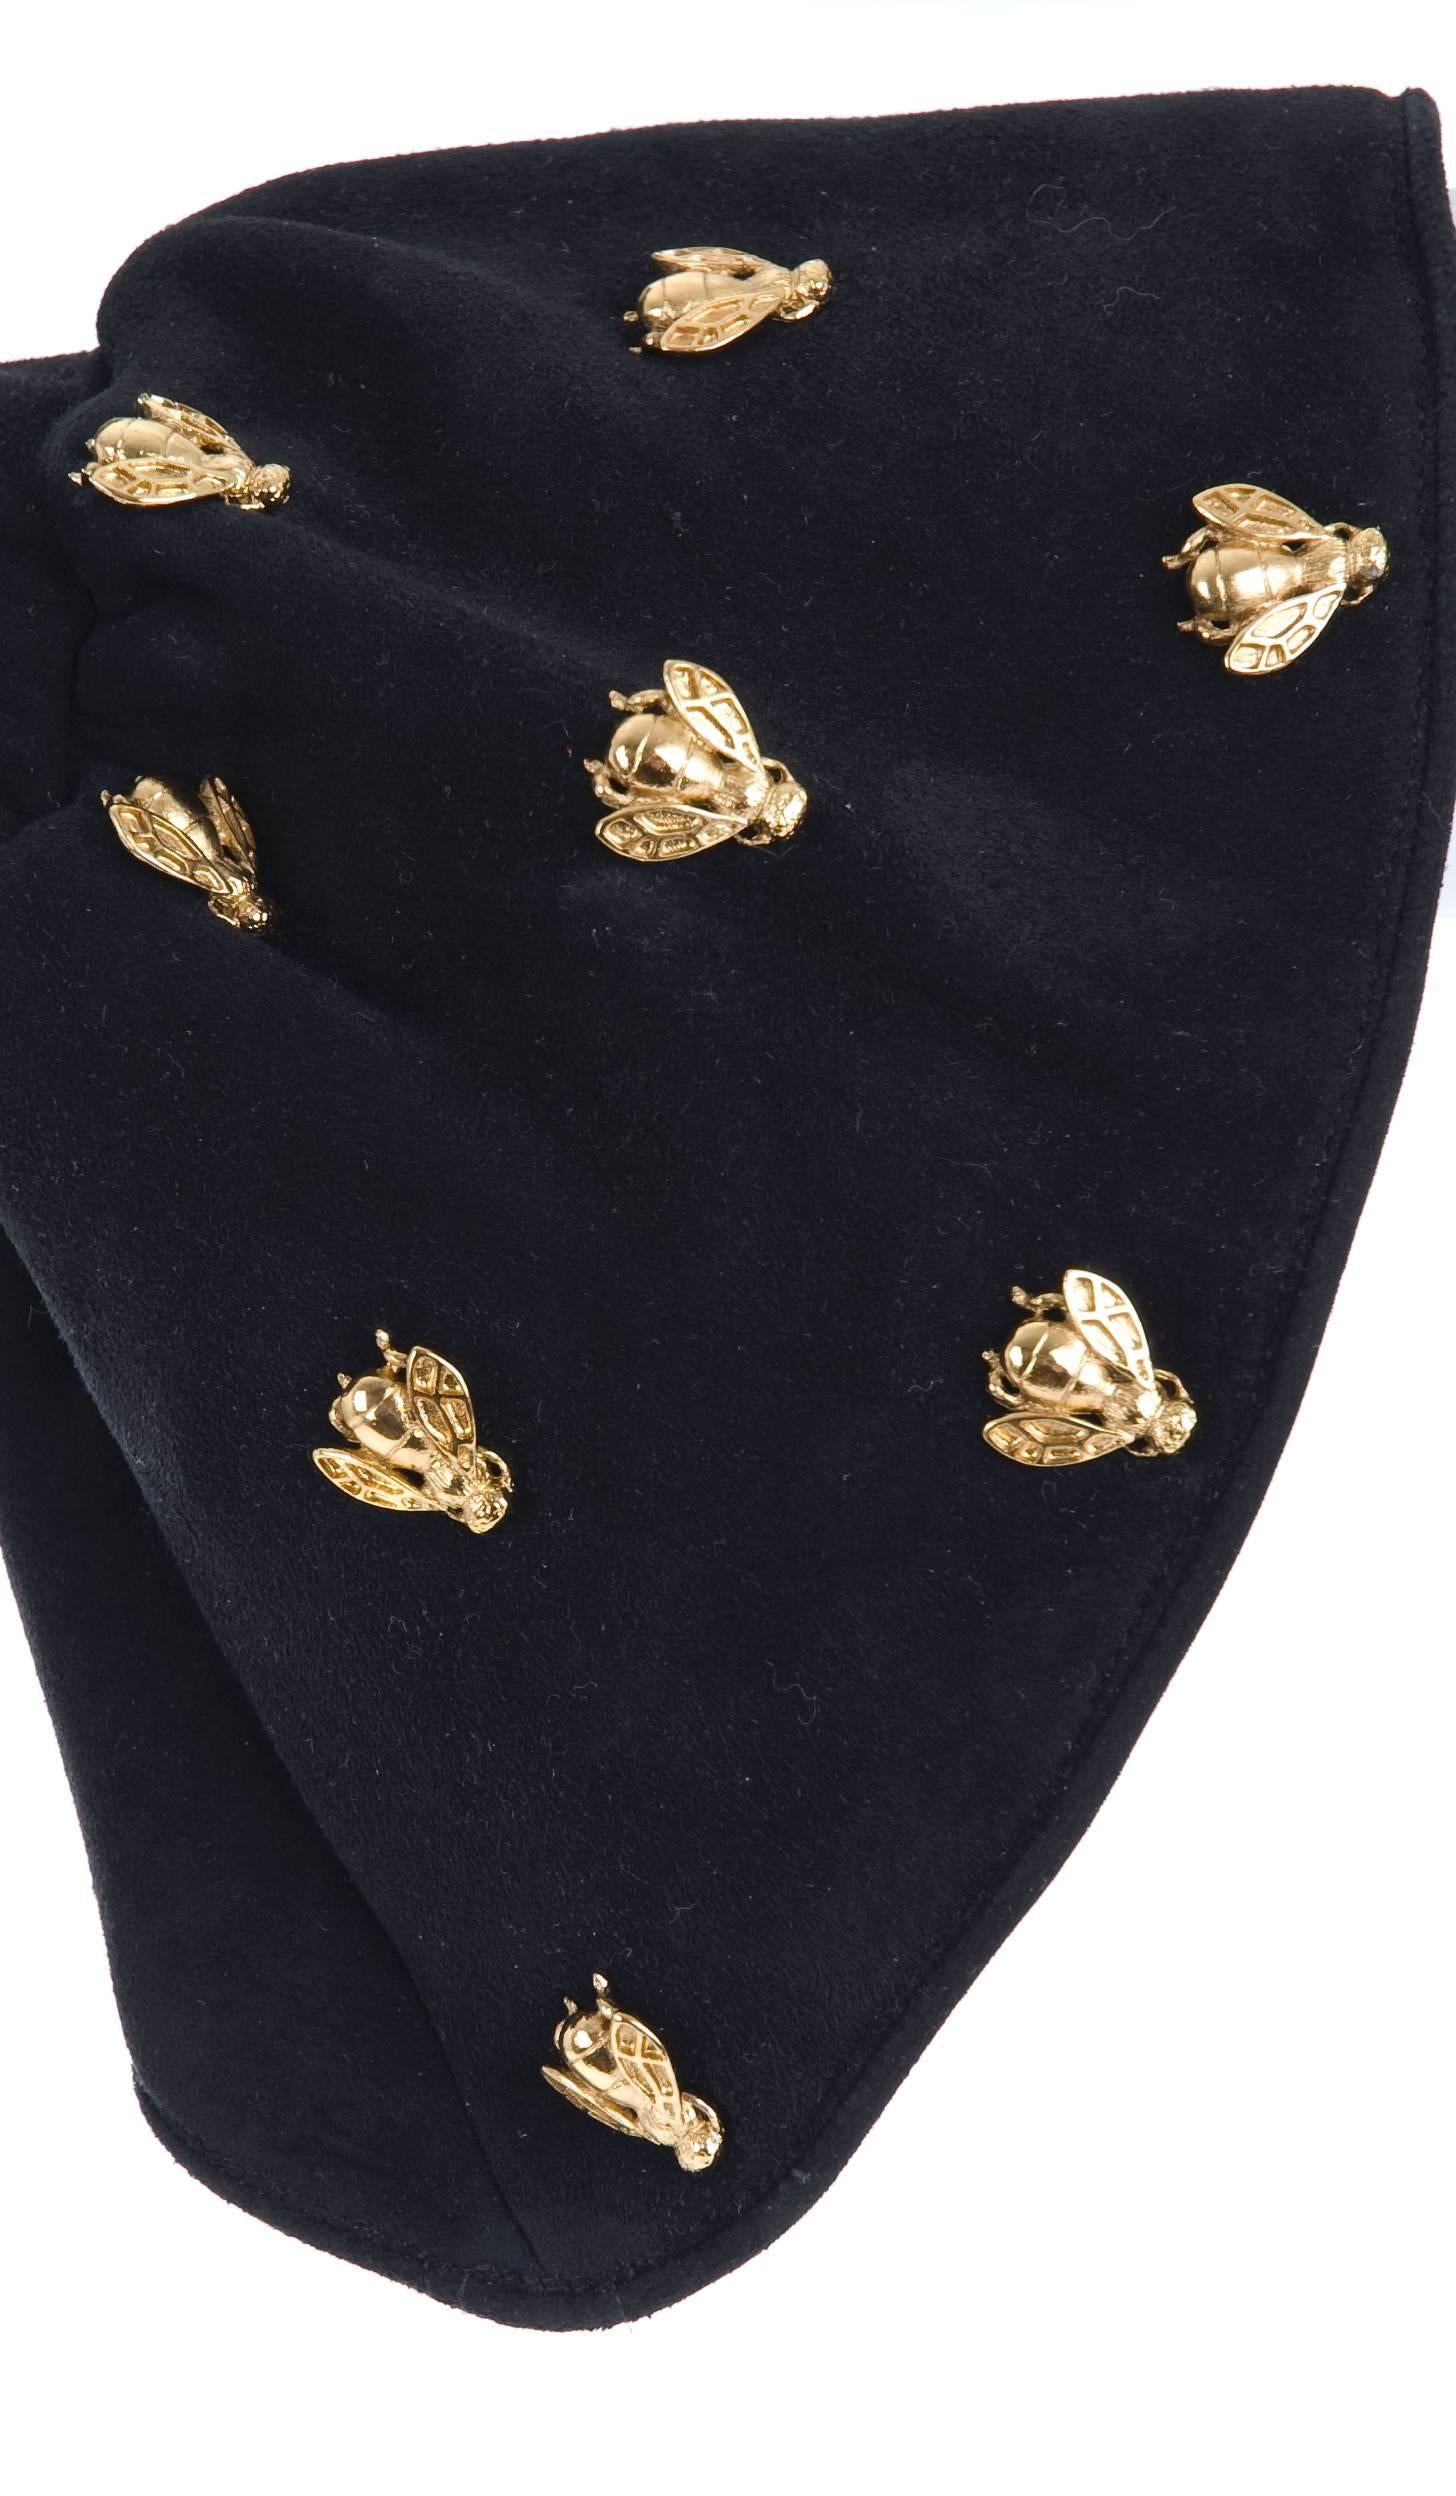 Vintage Christian Dior Boutique Black Suede Gloves Embelished with  Bee's For Sale 2